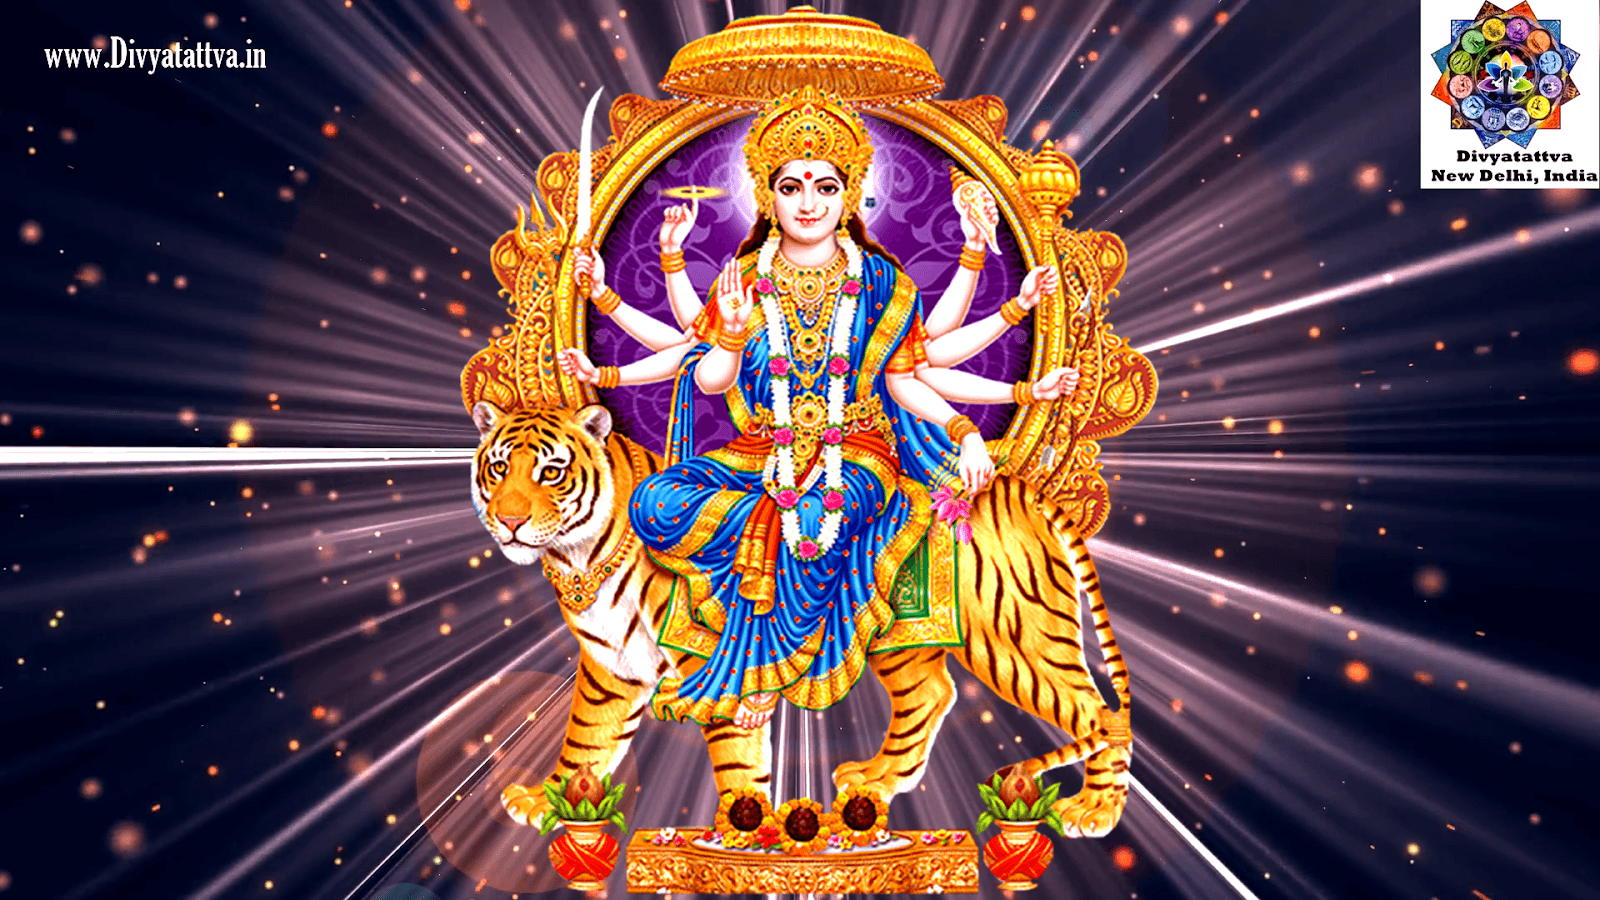 Durga Devi Wallpapers Desktop Hd